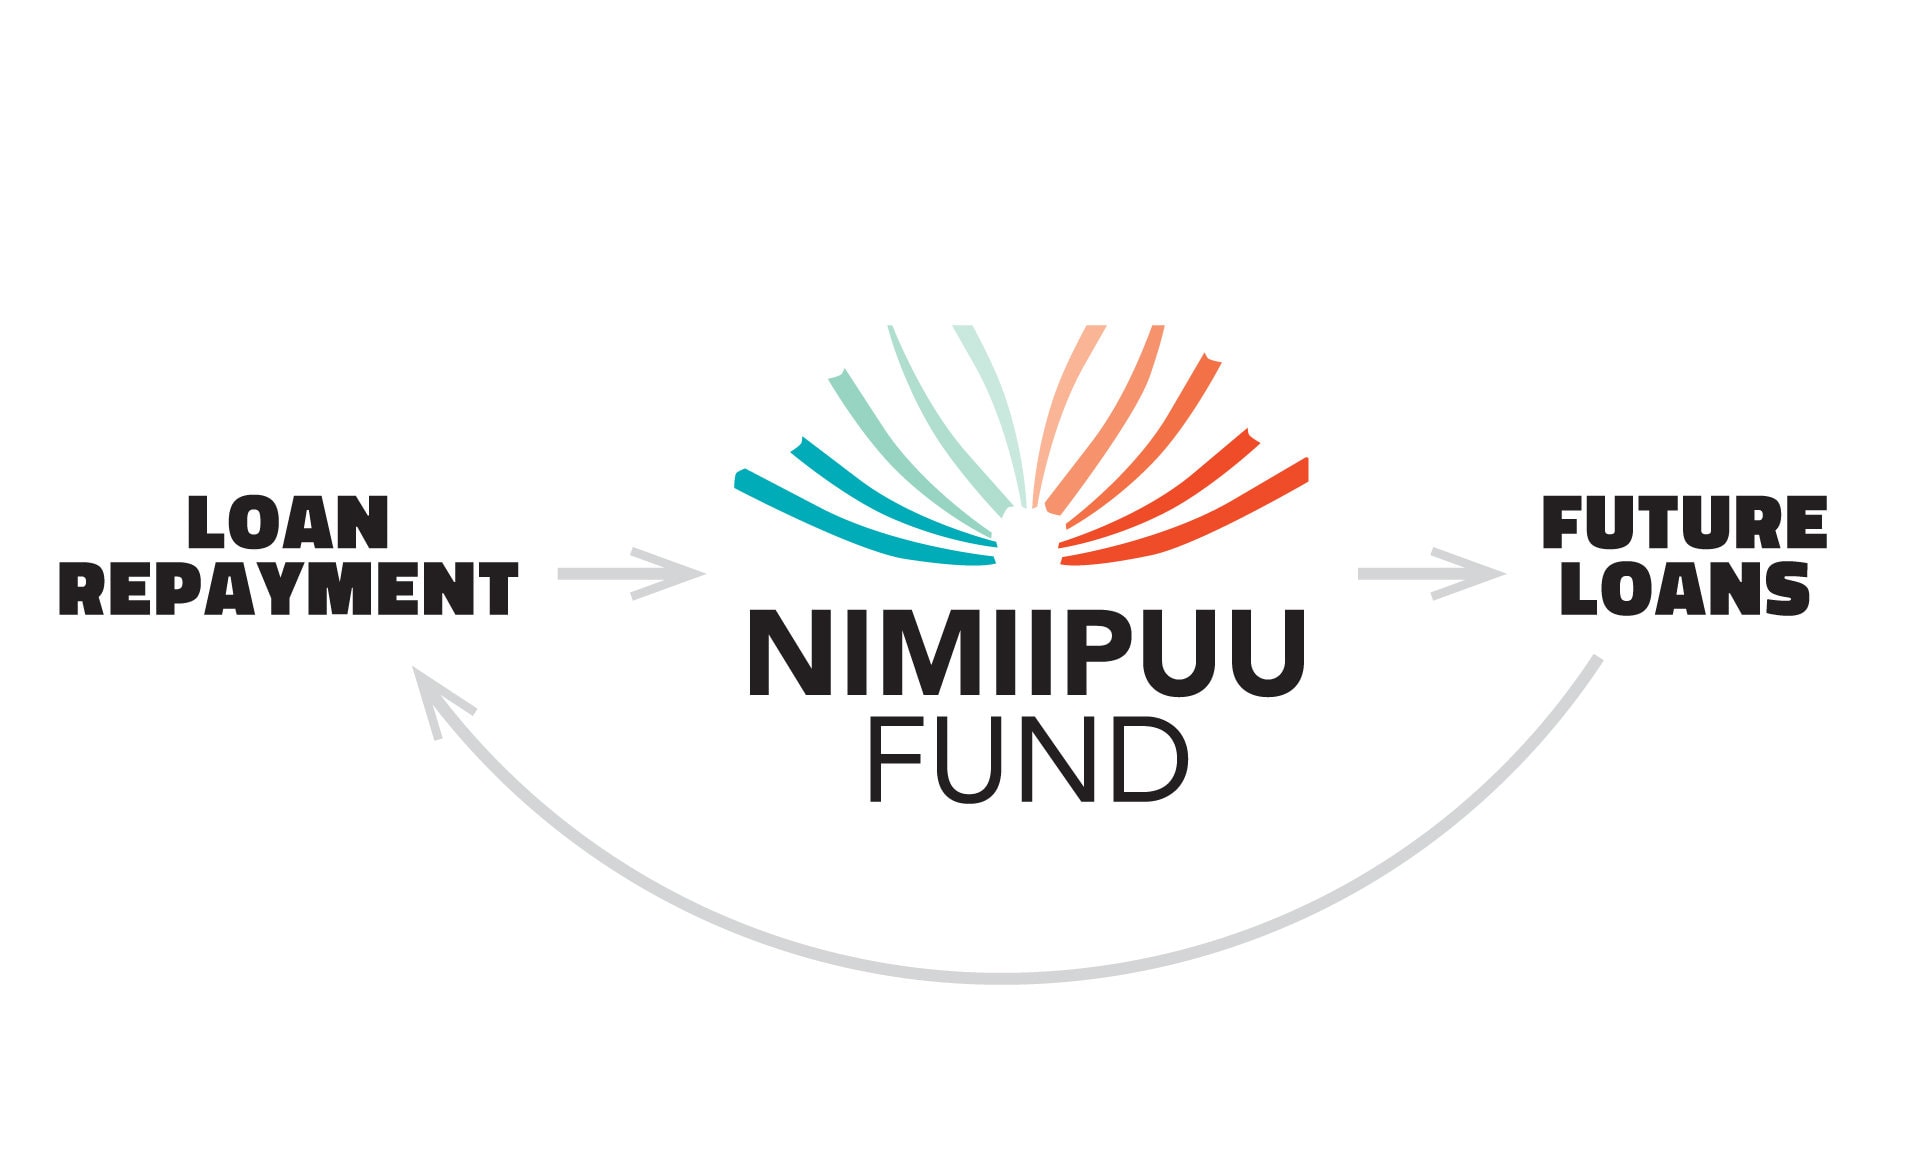 nimiipuu-fund-idaho-nez-perce-lapwai-loan-graph